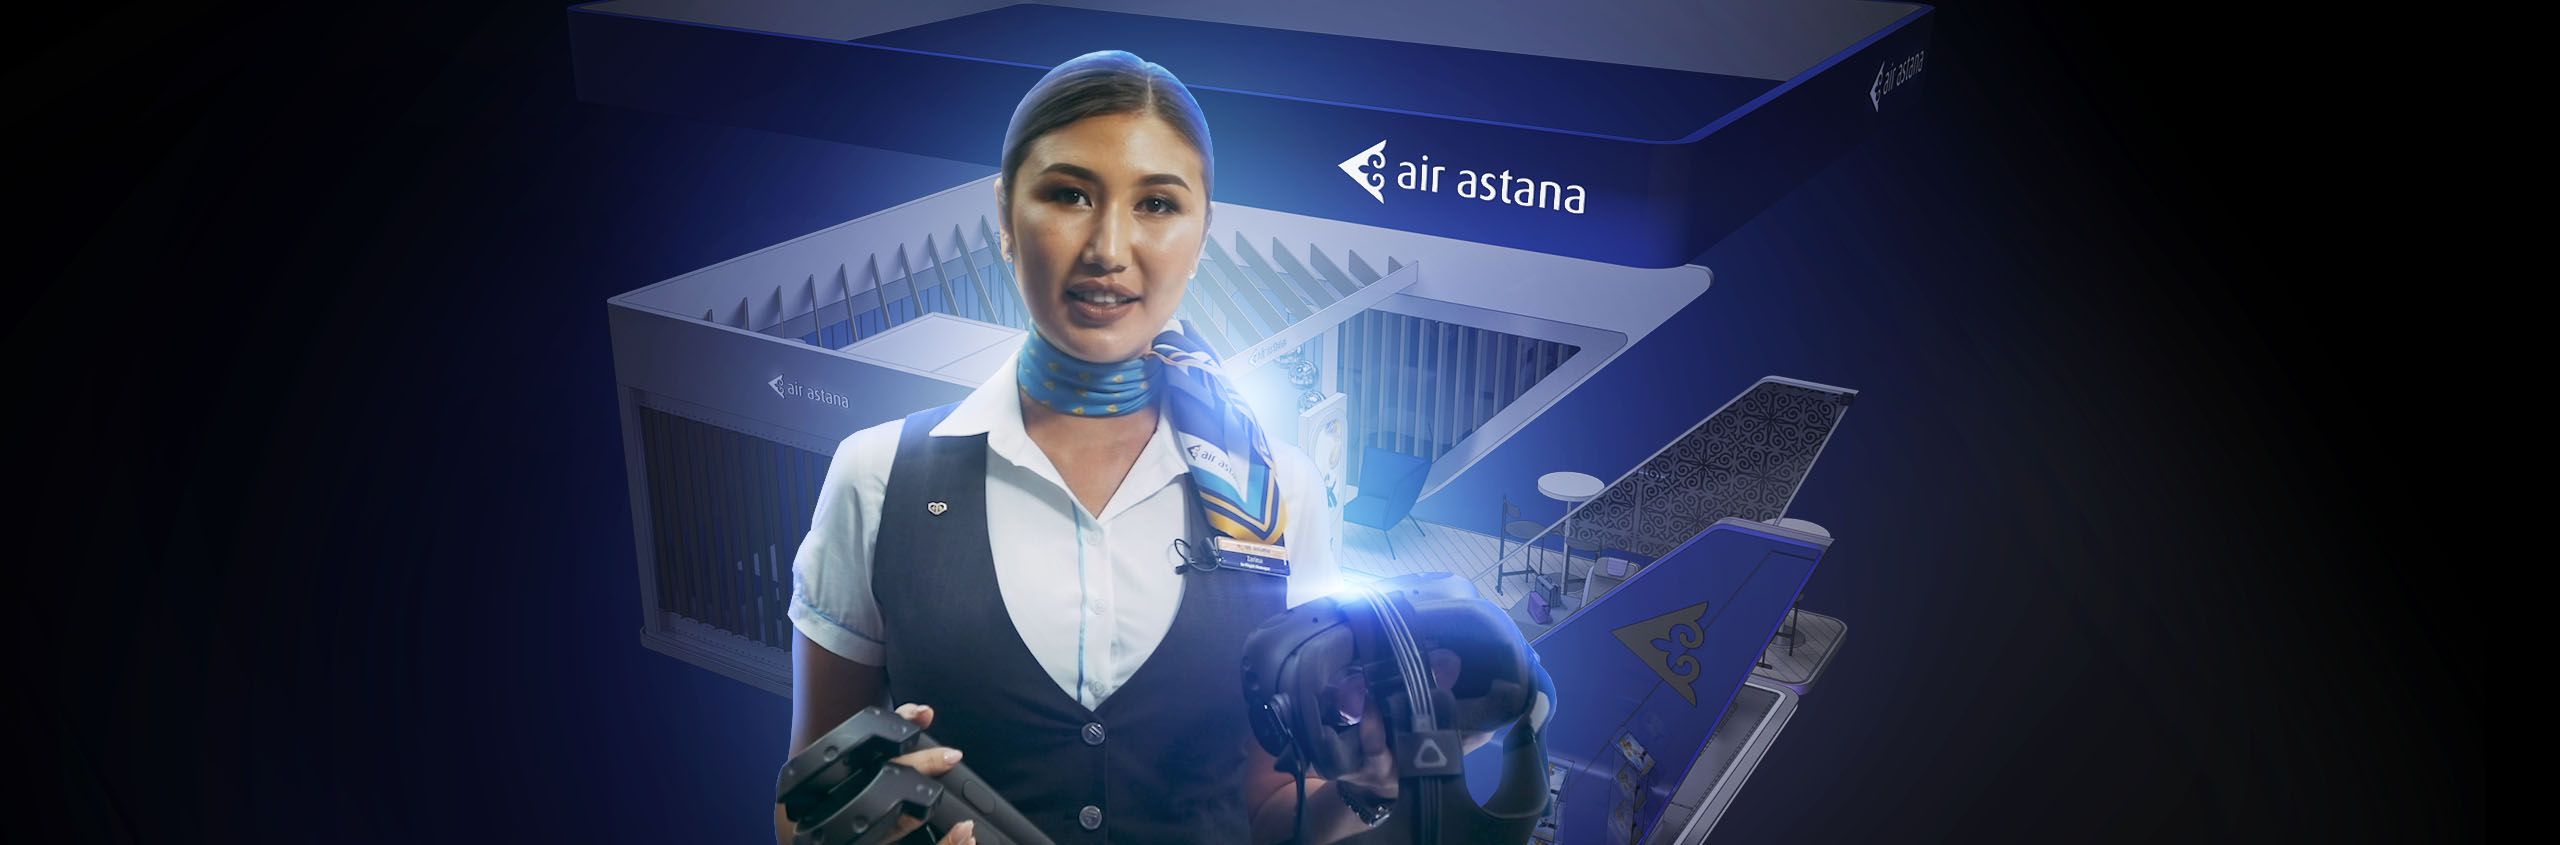 Air Astana - Exhibition Stand